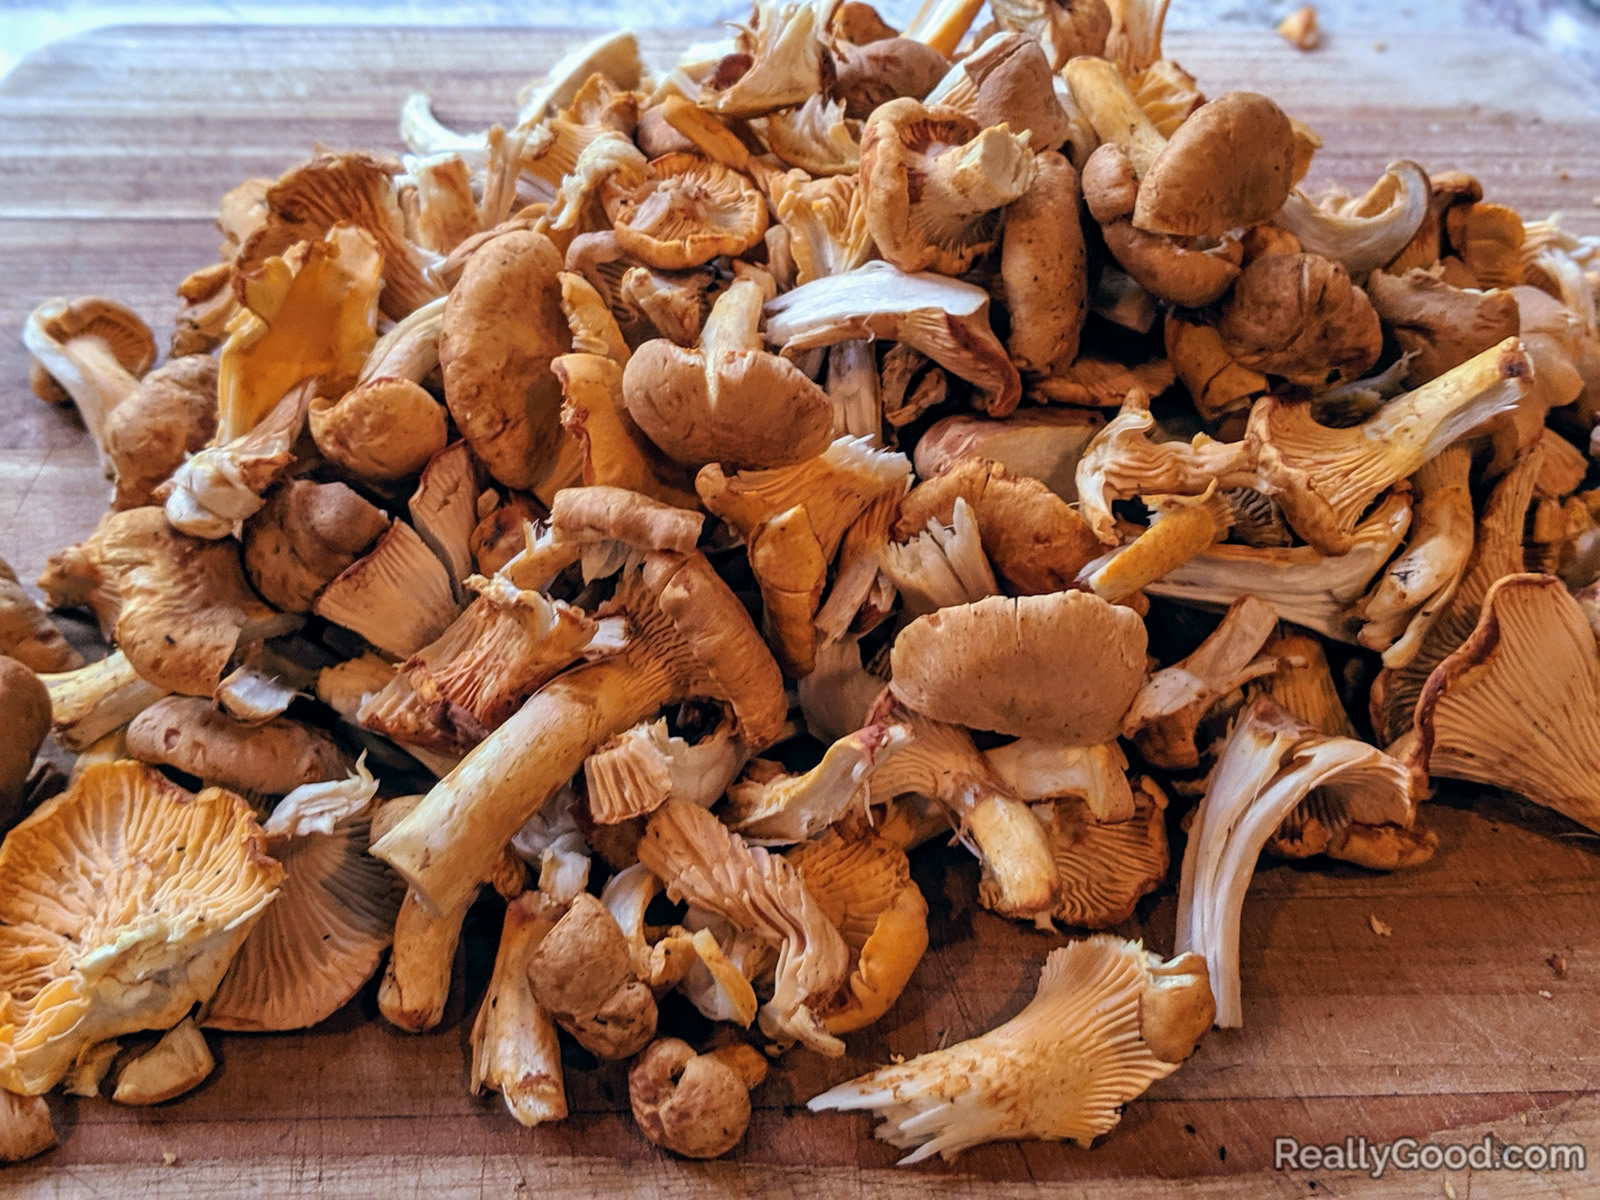 Wild Chantrelle mushrooms